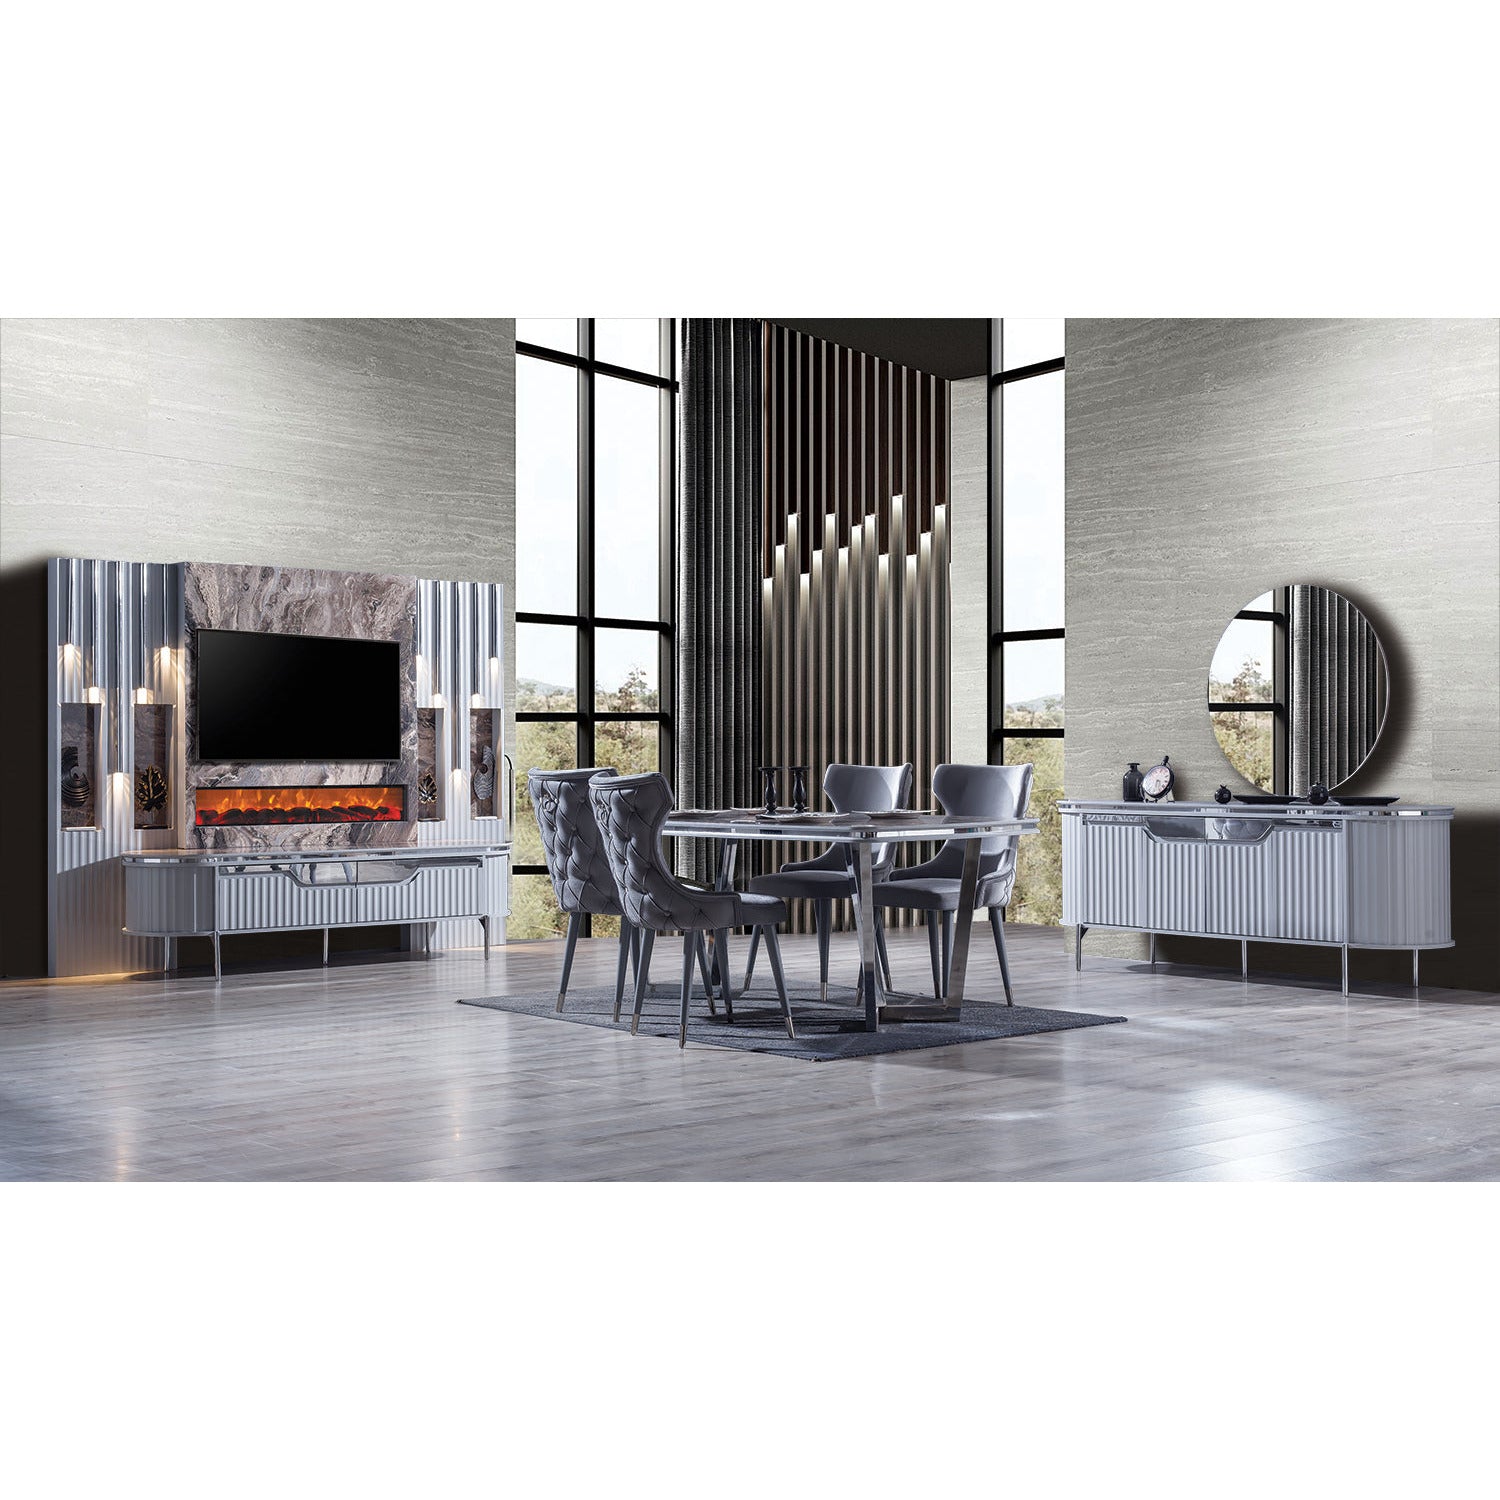 Zenon Stol - LINE Furniture Group